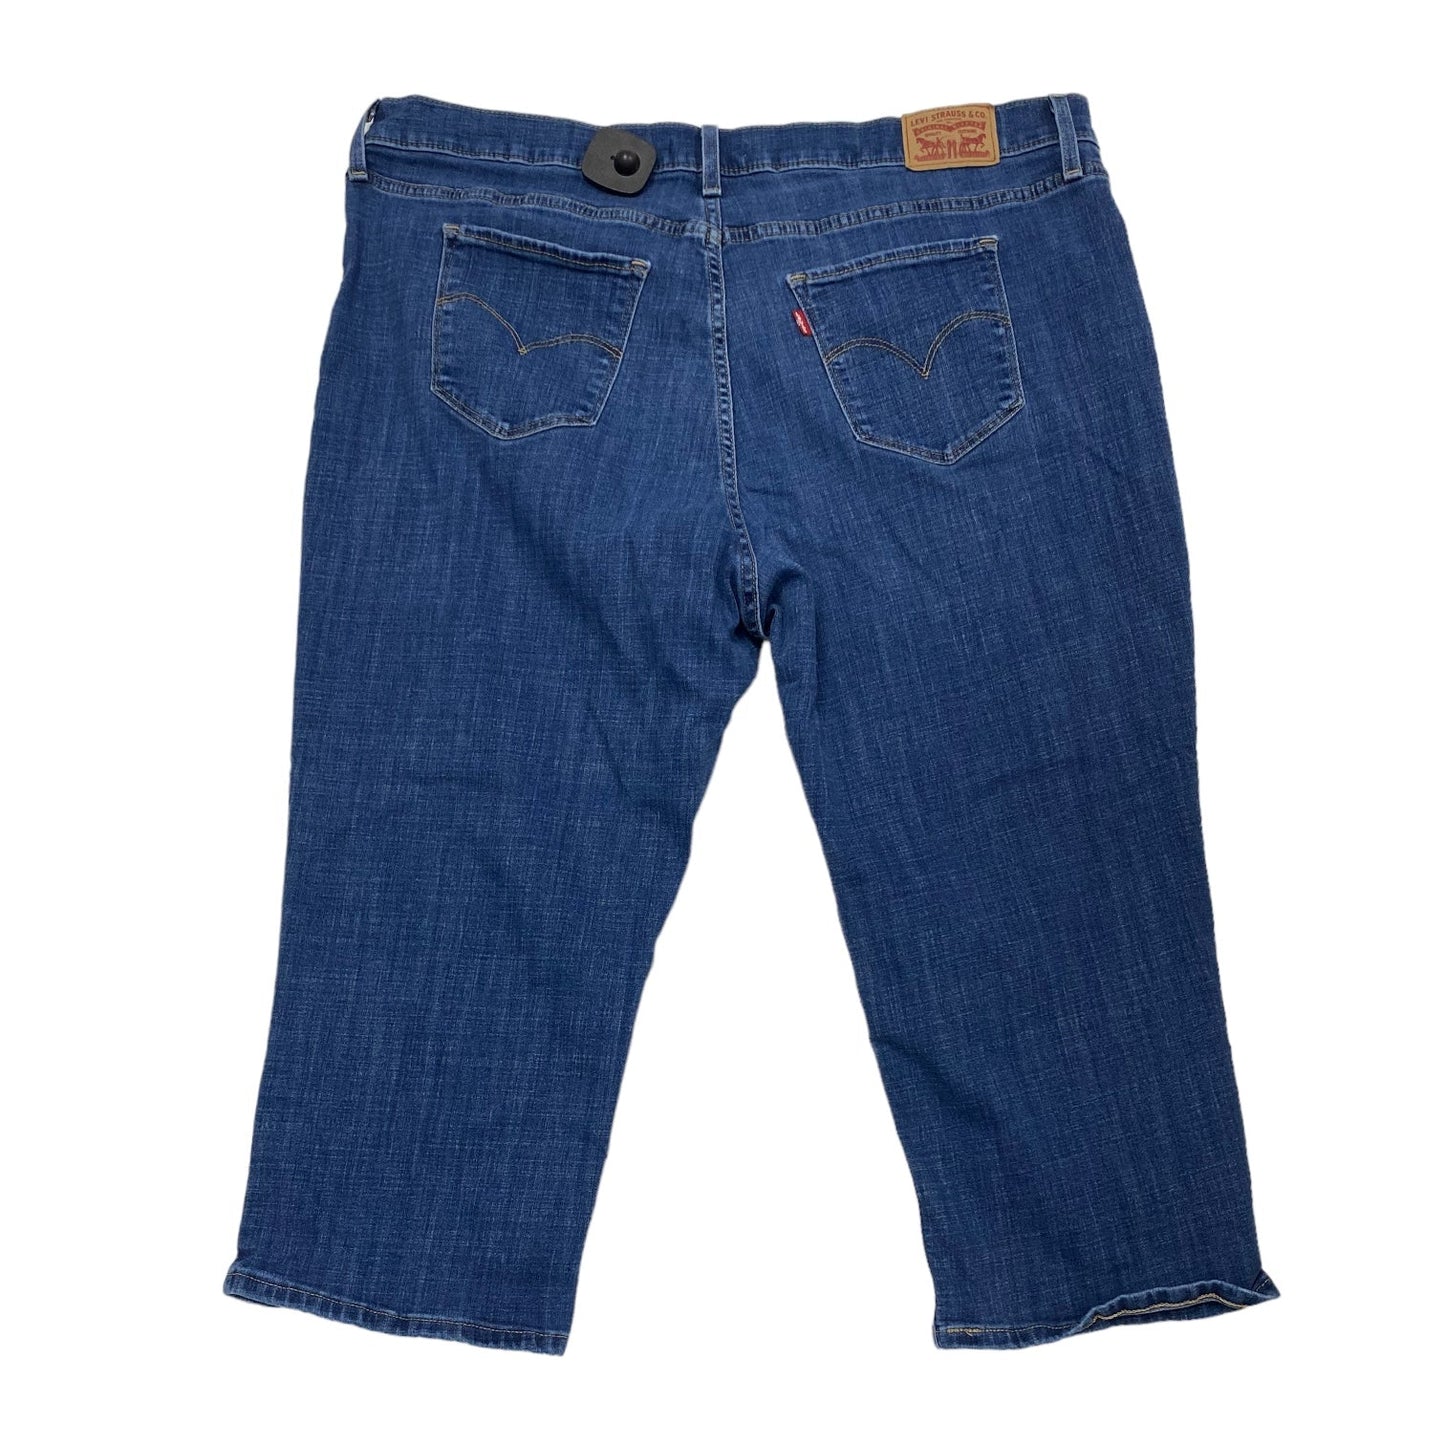 Jeans Cropped By Levis  Size: 20w